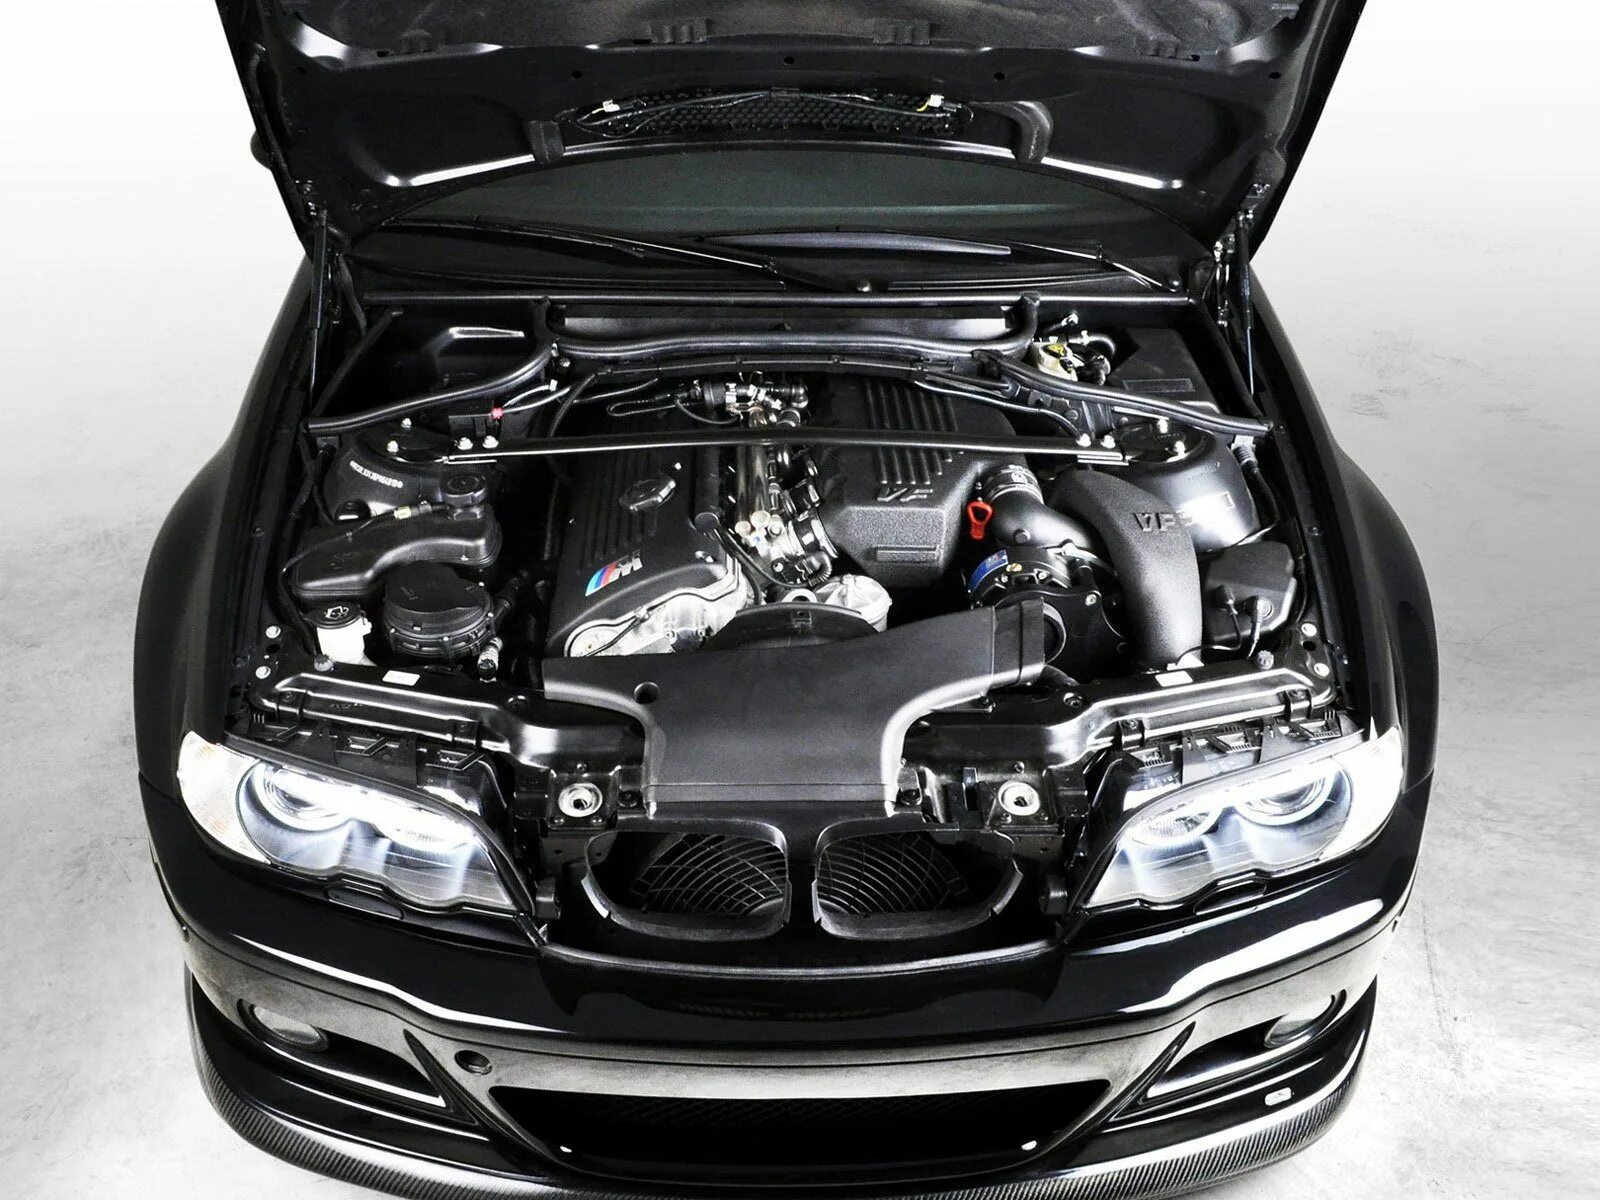 BMW m3 e46 мотор. BMW 3 e46 engine. BMW m3 e46 под капотом. BMW e46 m3 подкапотка.